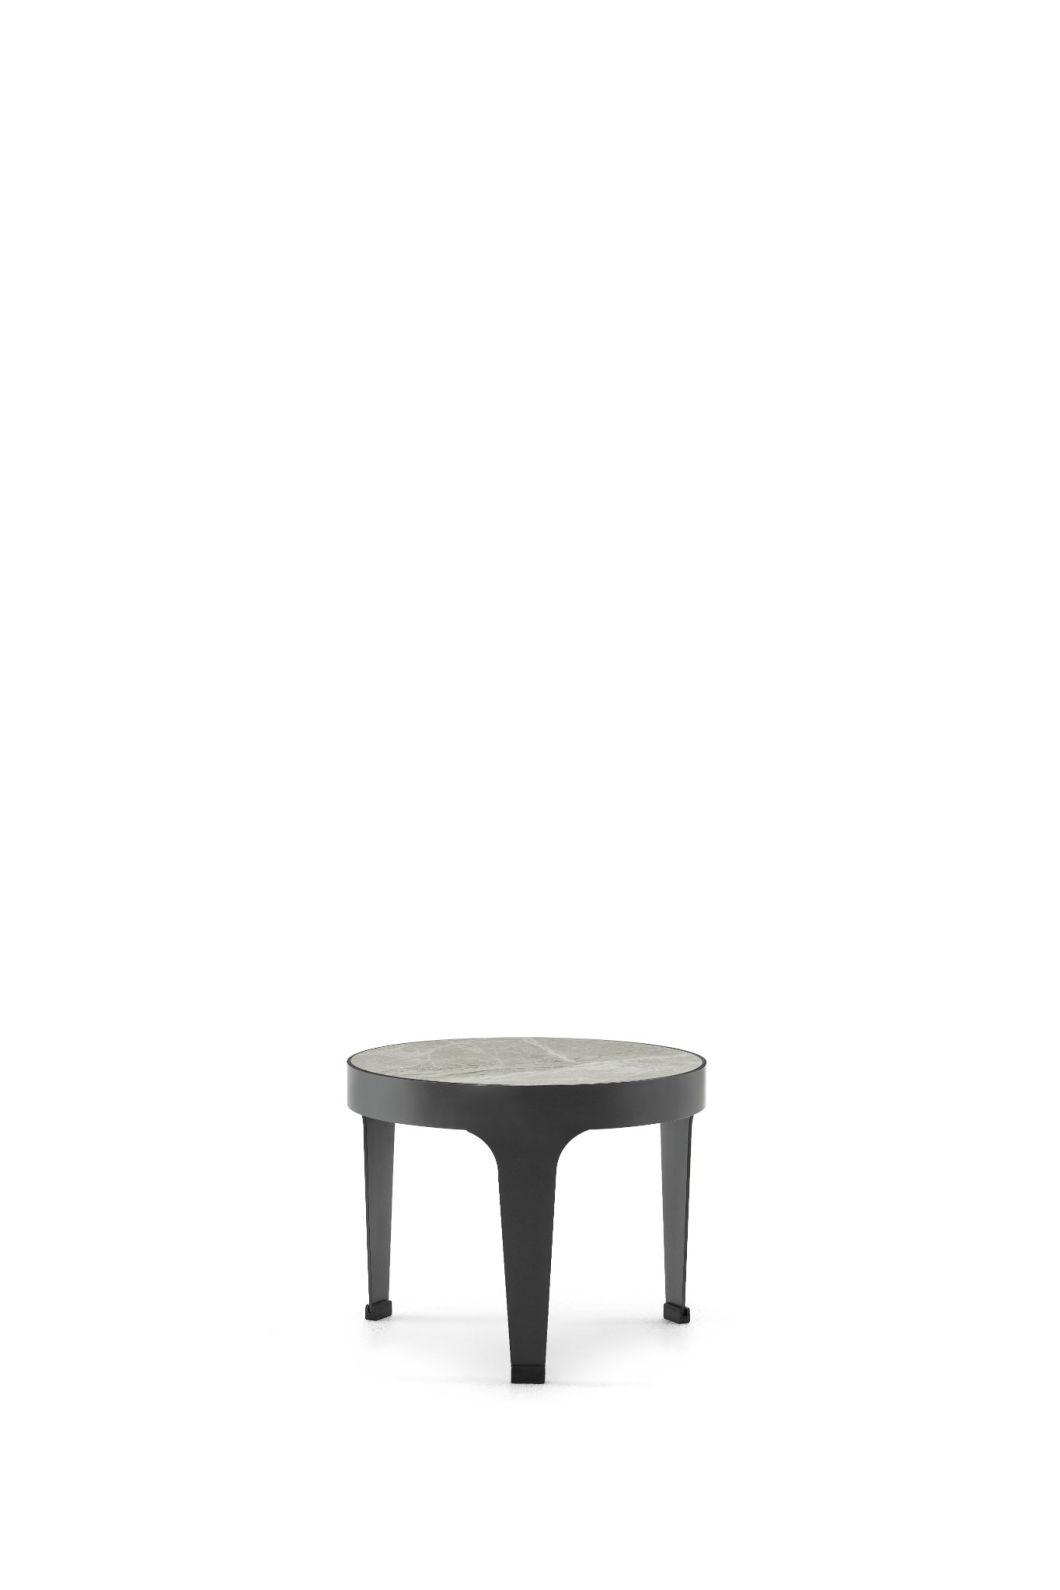 M-Cj003D Coffee Table, Italian Design Furniture in Home and Hotel